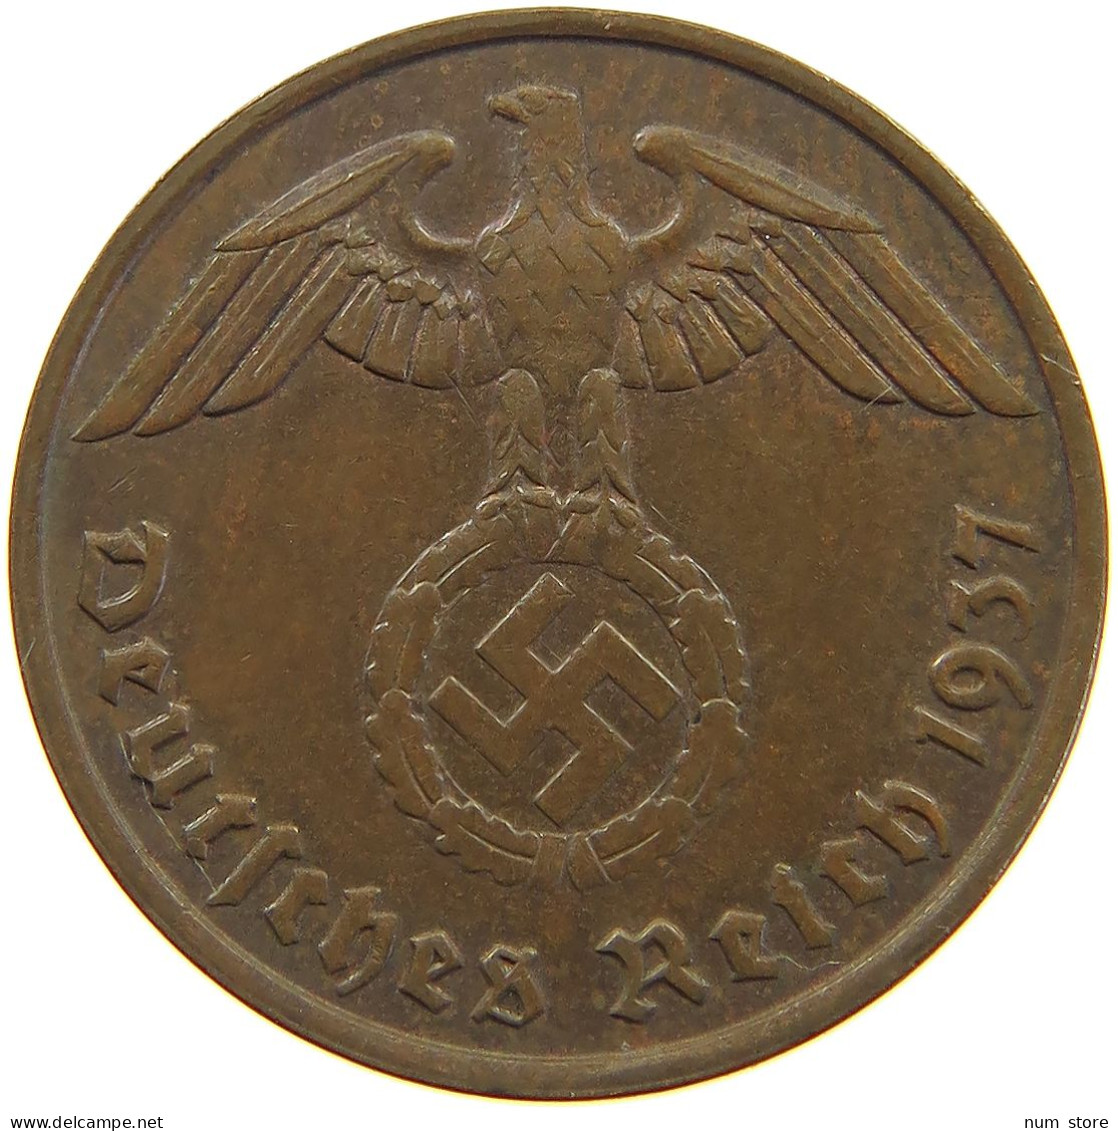 GERMANY 2 PFENNIG 1937 A #c083 0093 - 2 Reichspfennig